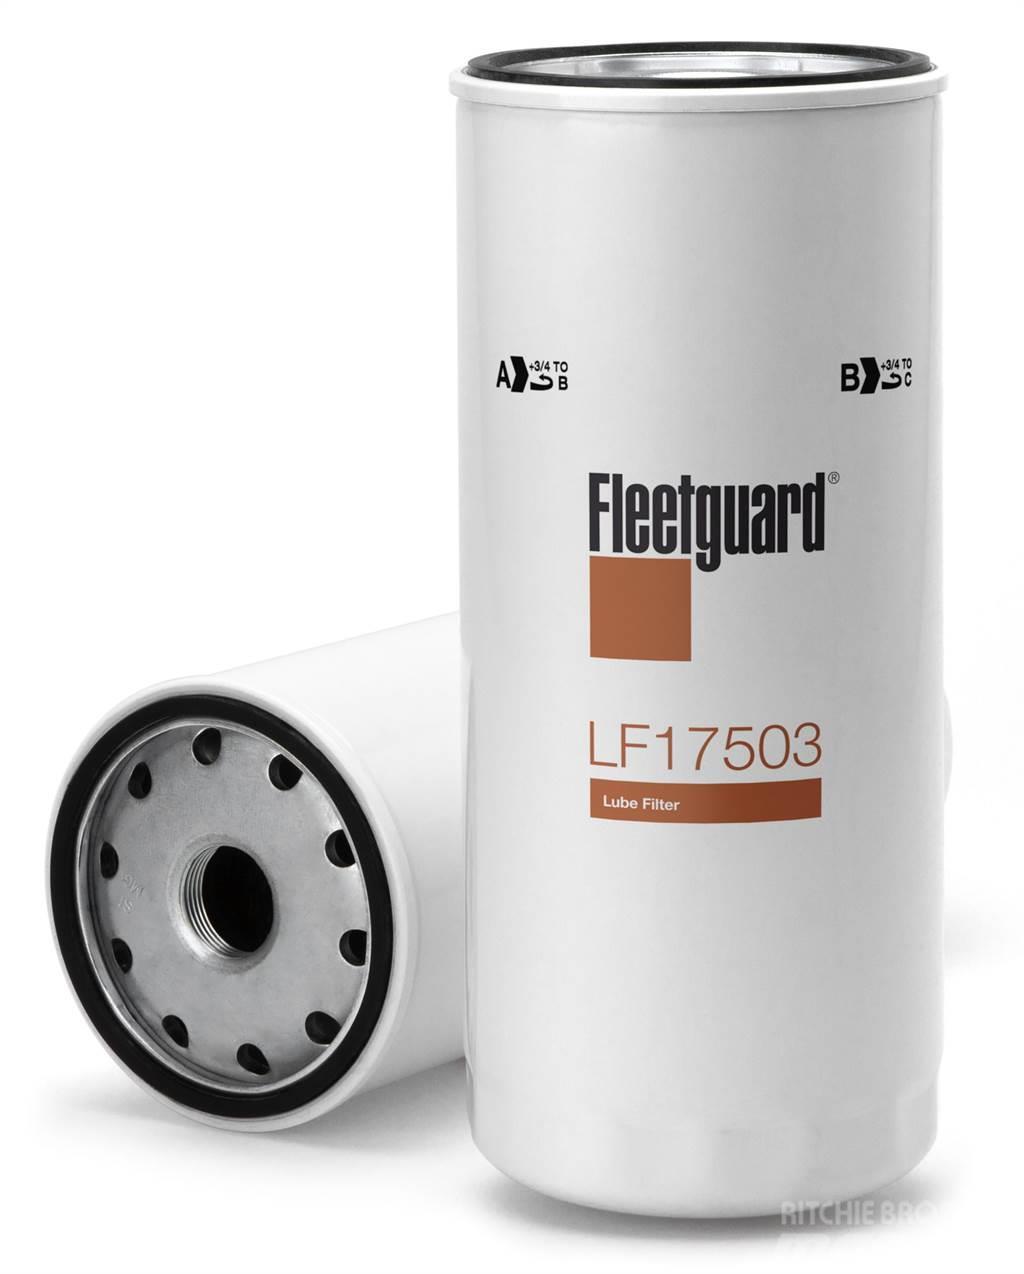 Fleetguard oliefilter LF17503 Citi